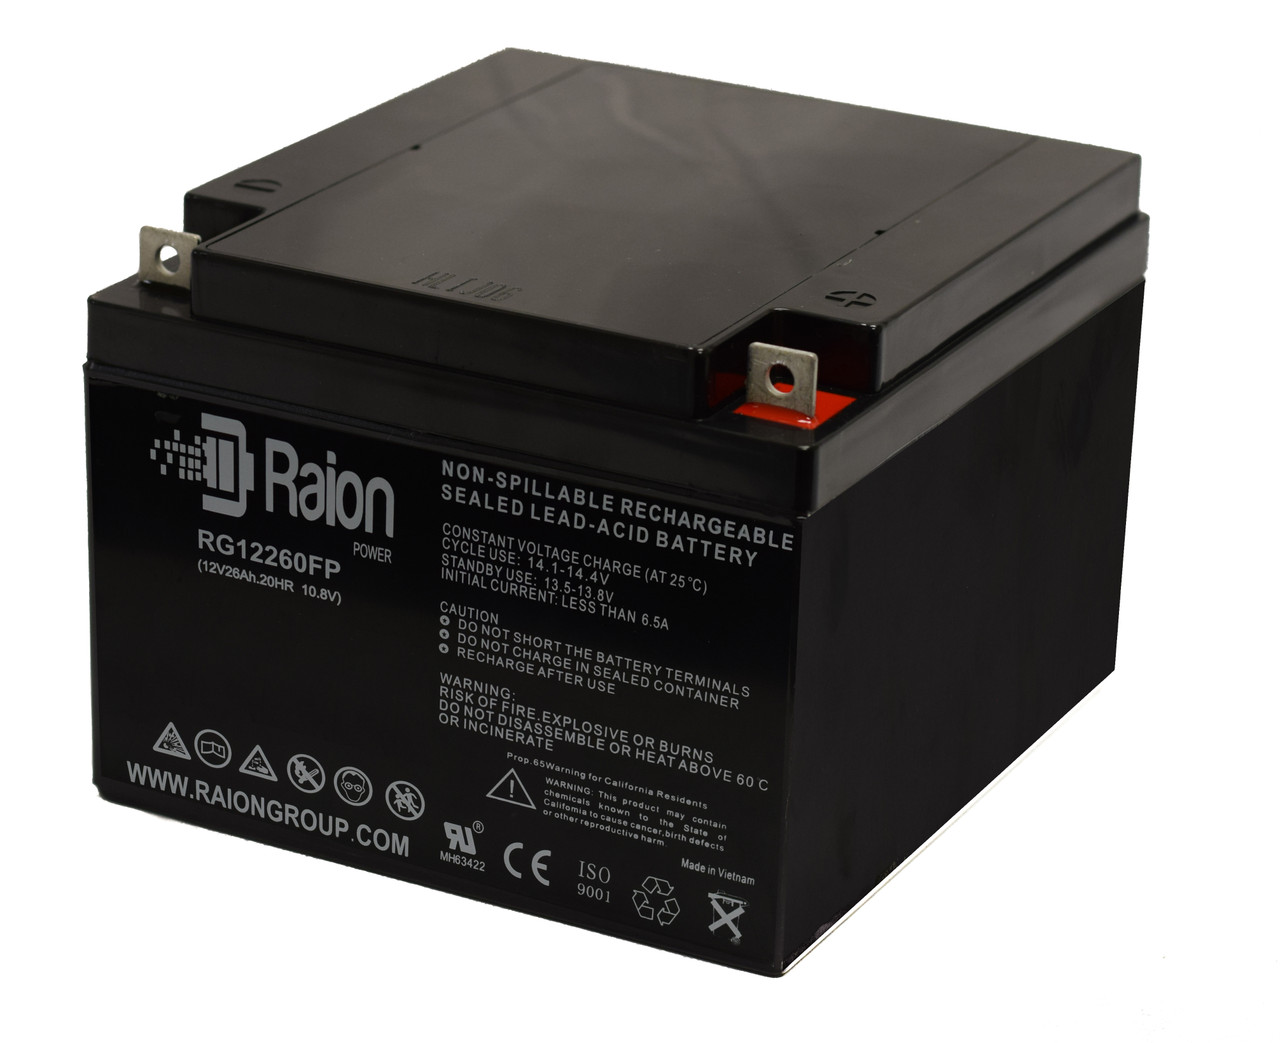 Raion Power Replacement 12V 26Ah Battery for Amigo Mobility Escort - 1 Pack